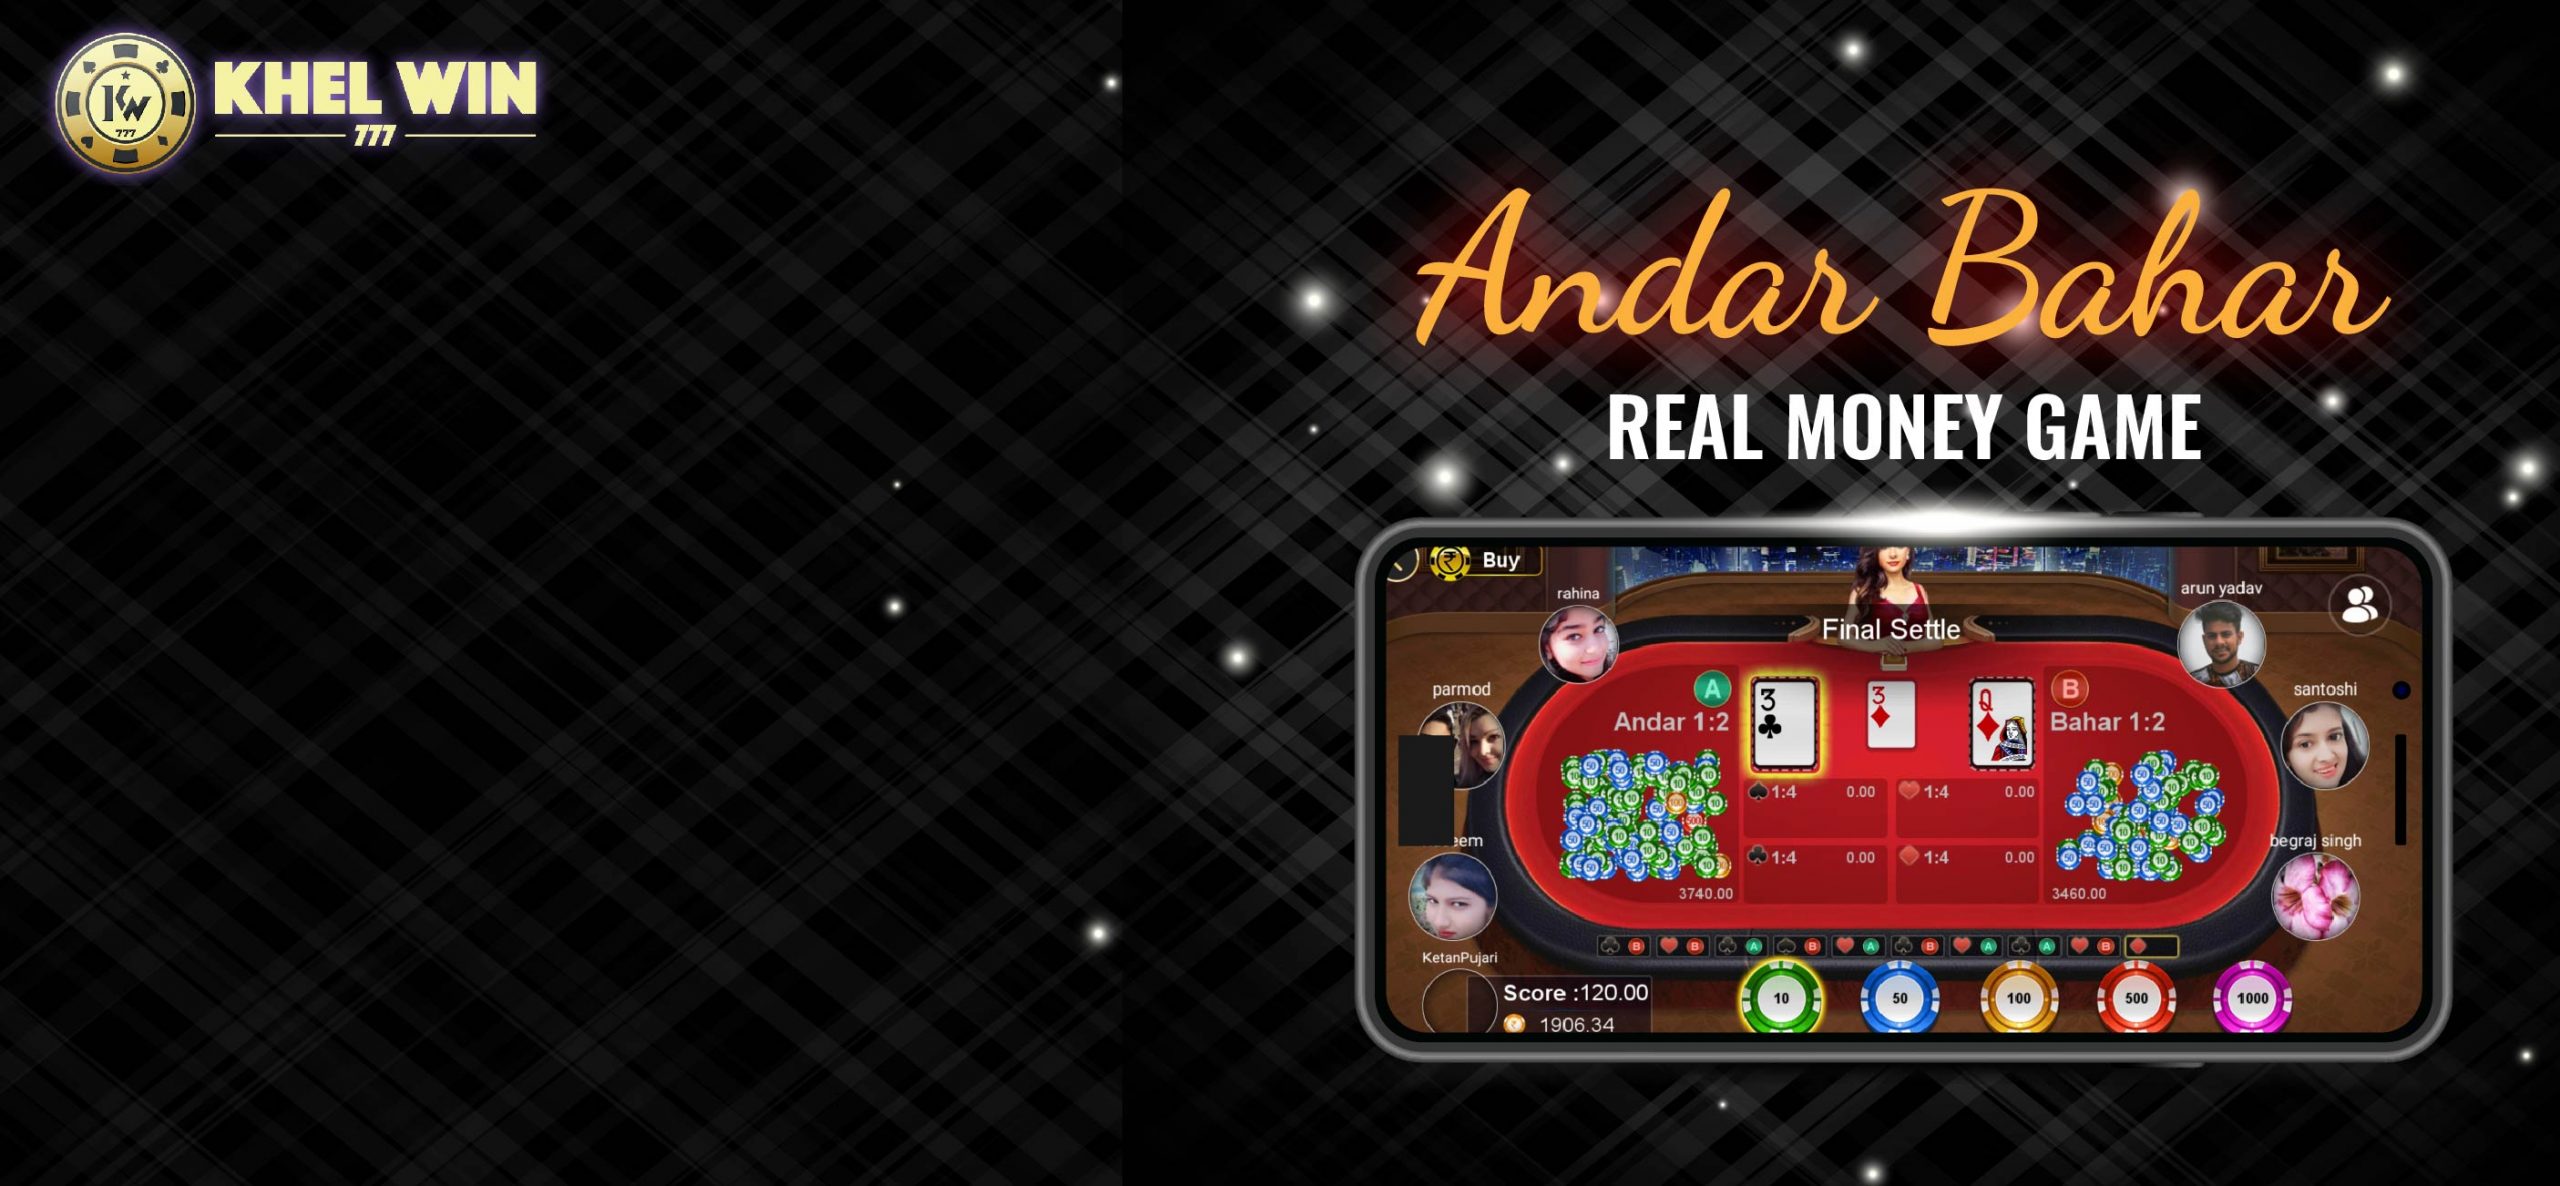 Andar Bahar online casino game